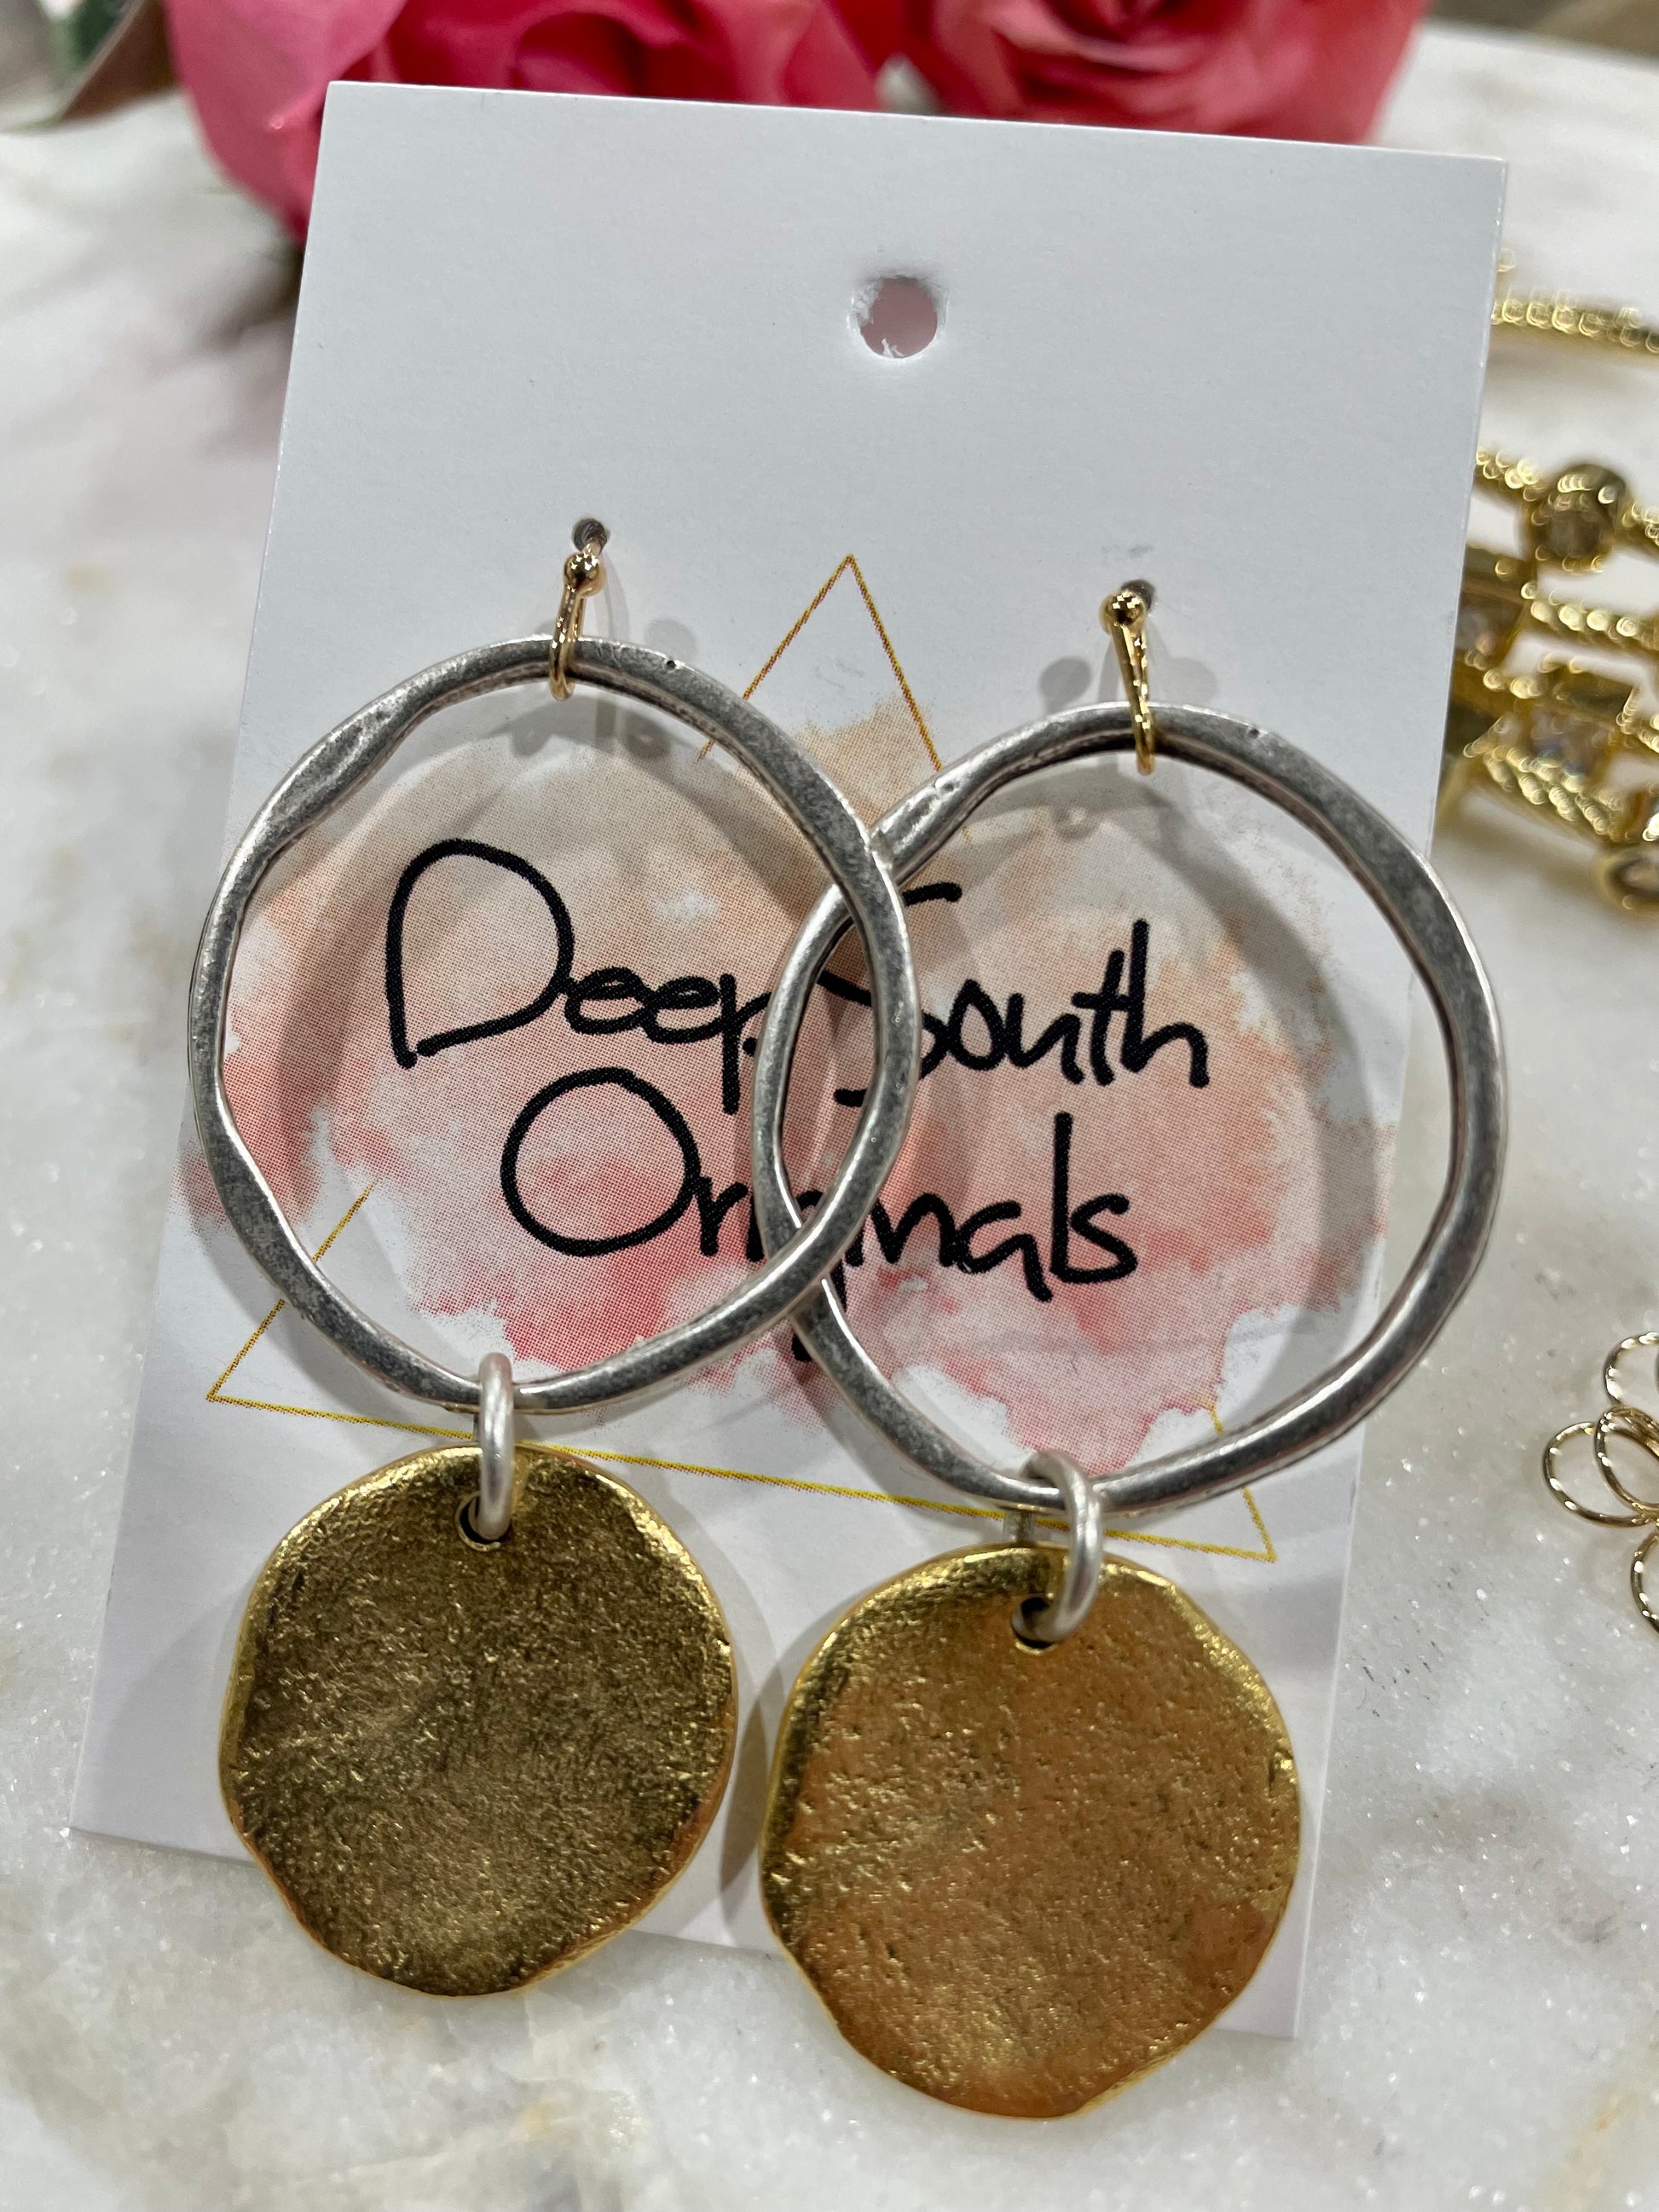 Mixed Metal Organic Circle and Gold Coin Earrings by Deep South Originals - Deep South Originals